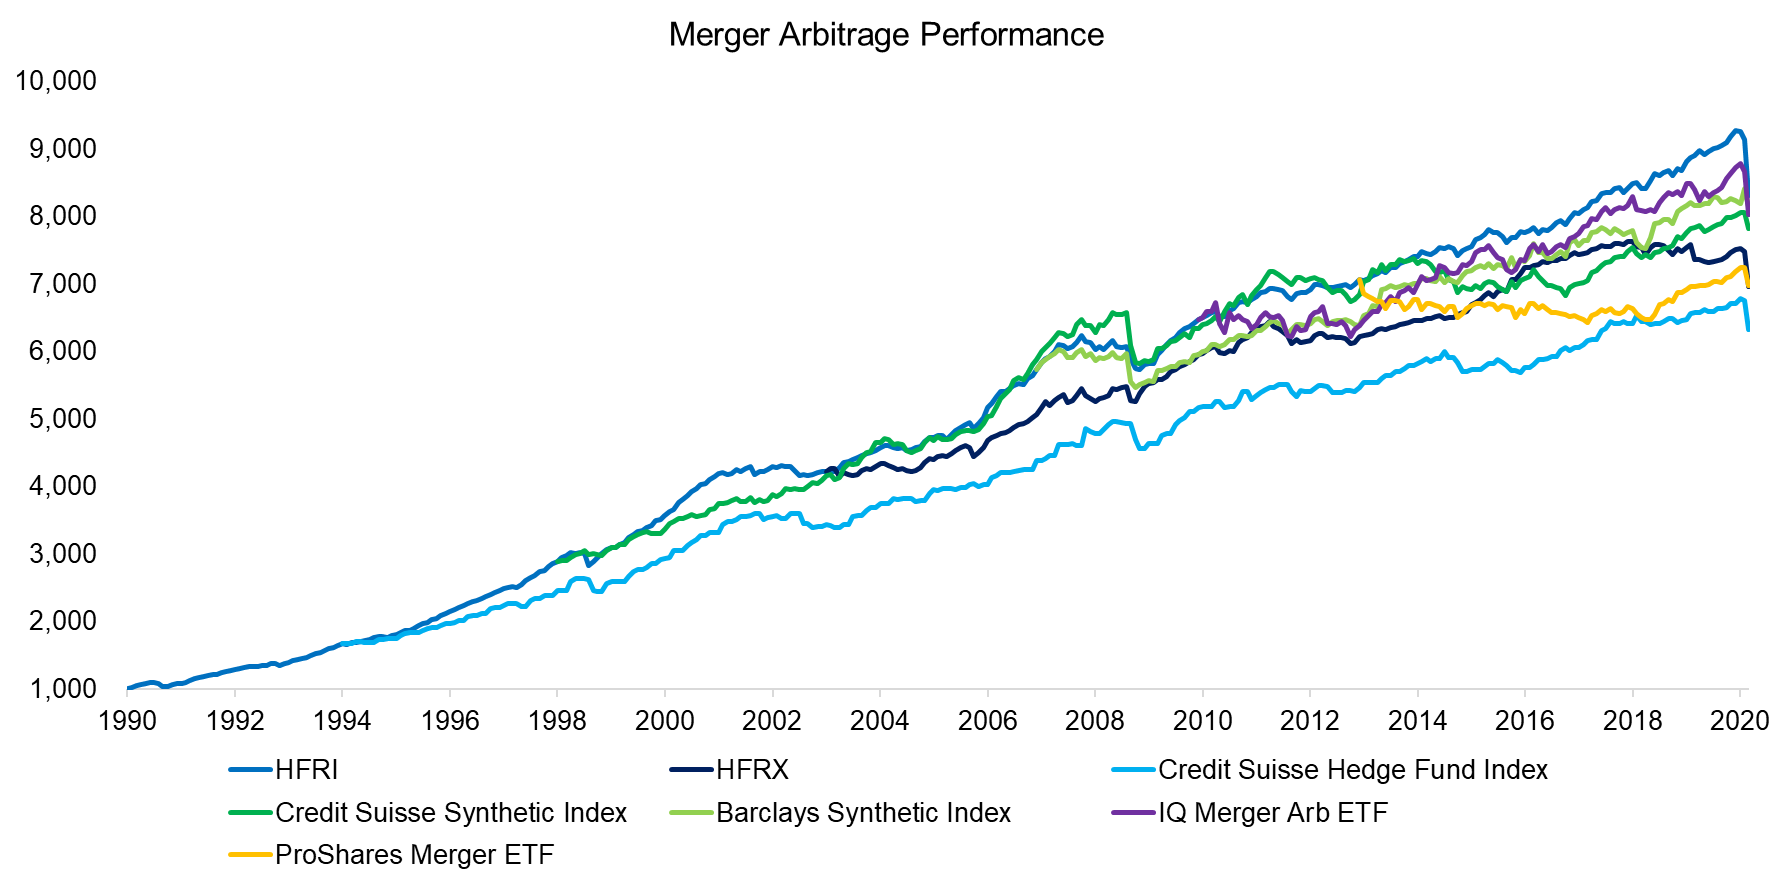 Merger Arbitrage Performance